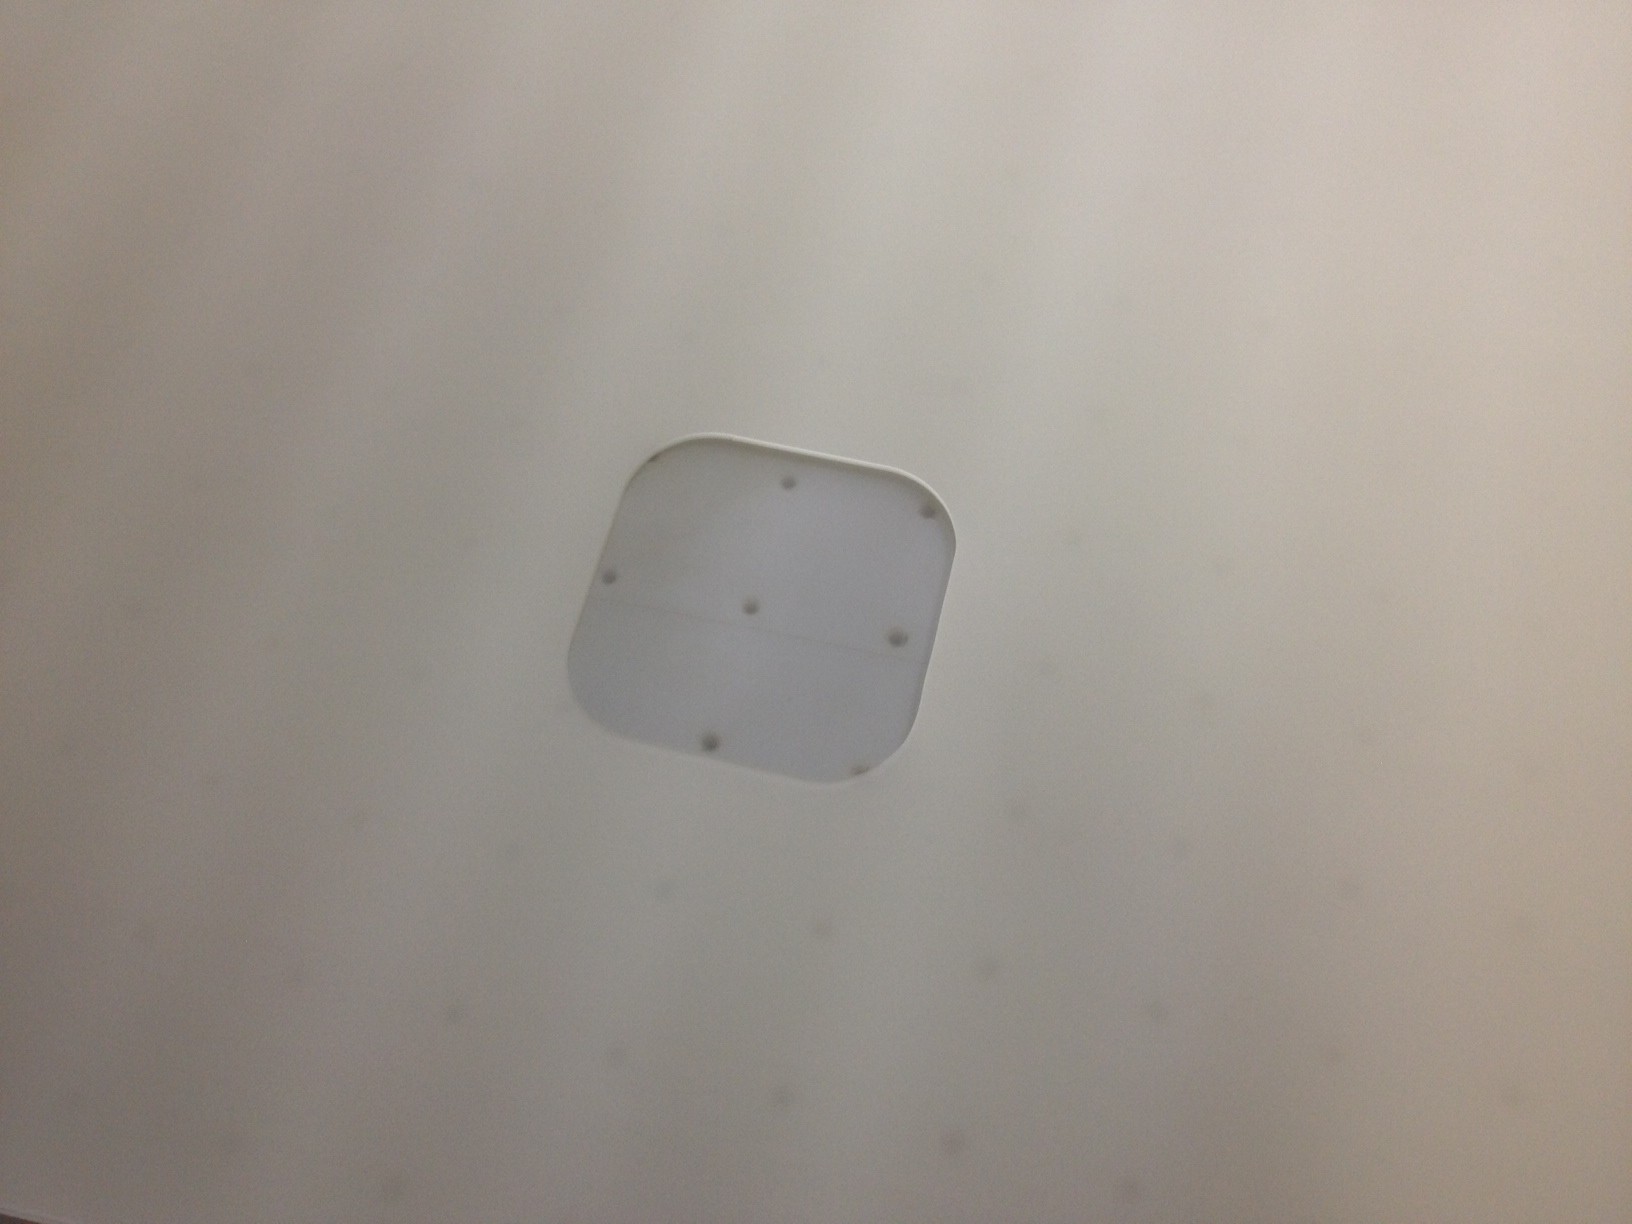 PVB CNC Shape Cutter vinyl hole photo 2 - Glassline